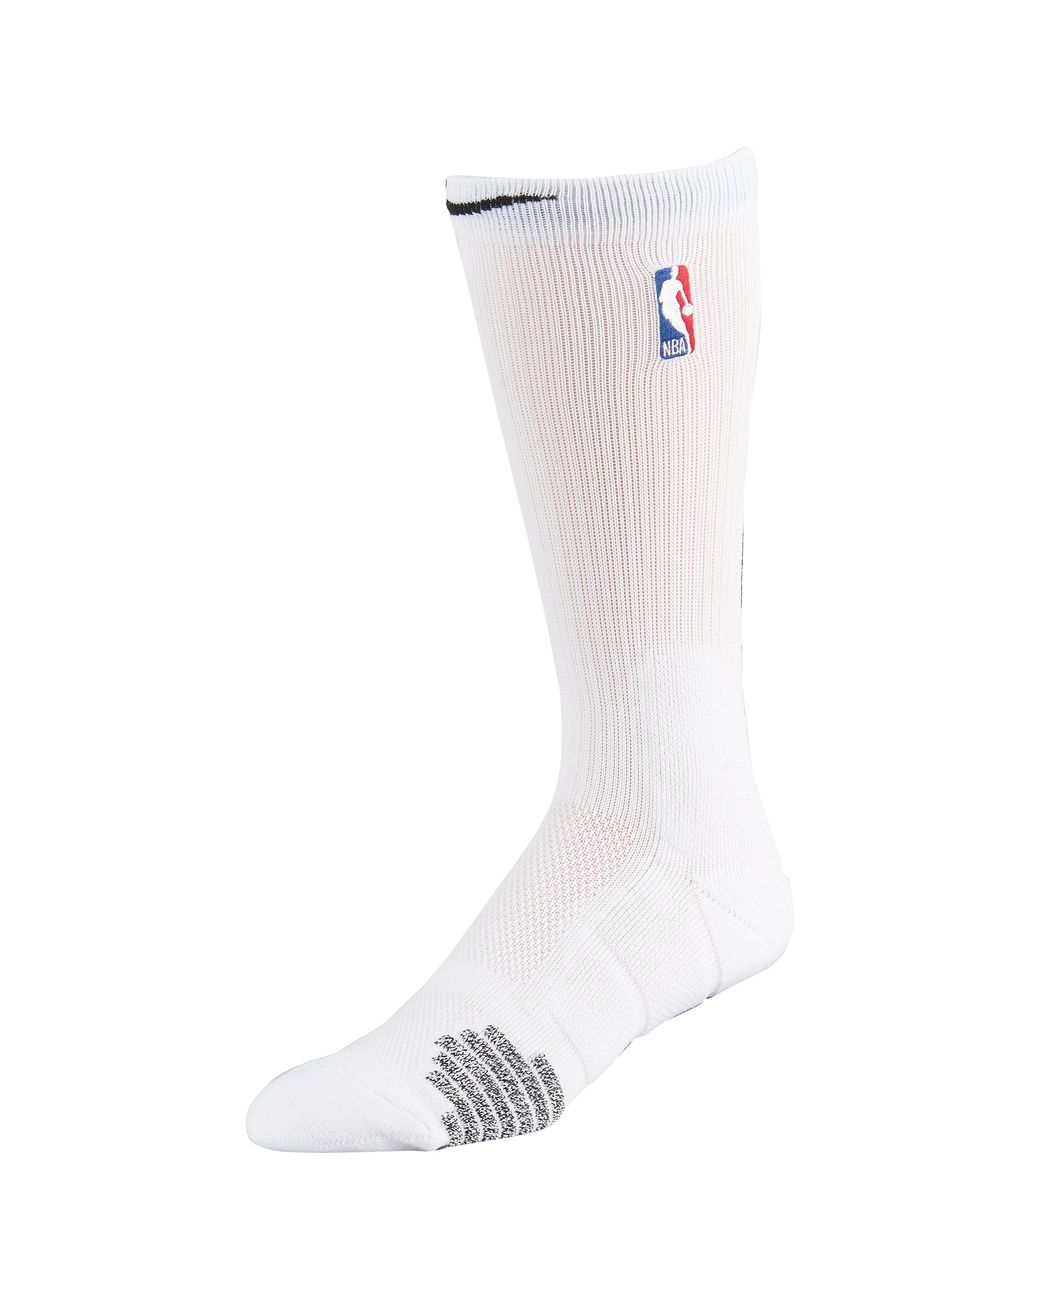 Nike Nba League Gear Nba Quick Crew Socks in White for Men - Lyst